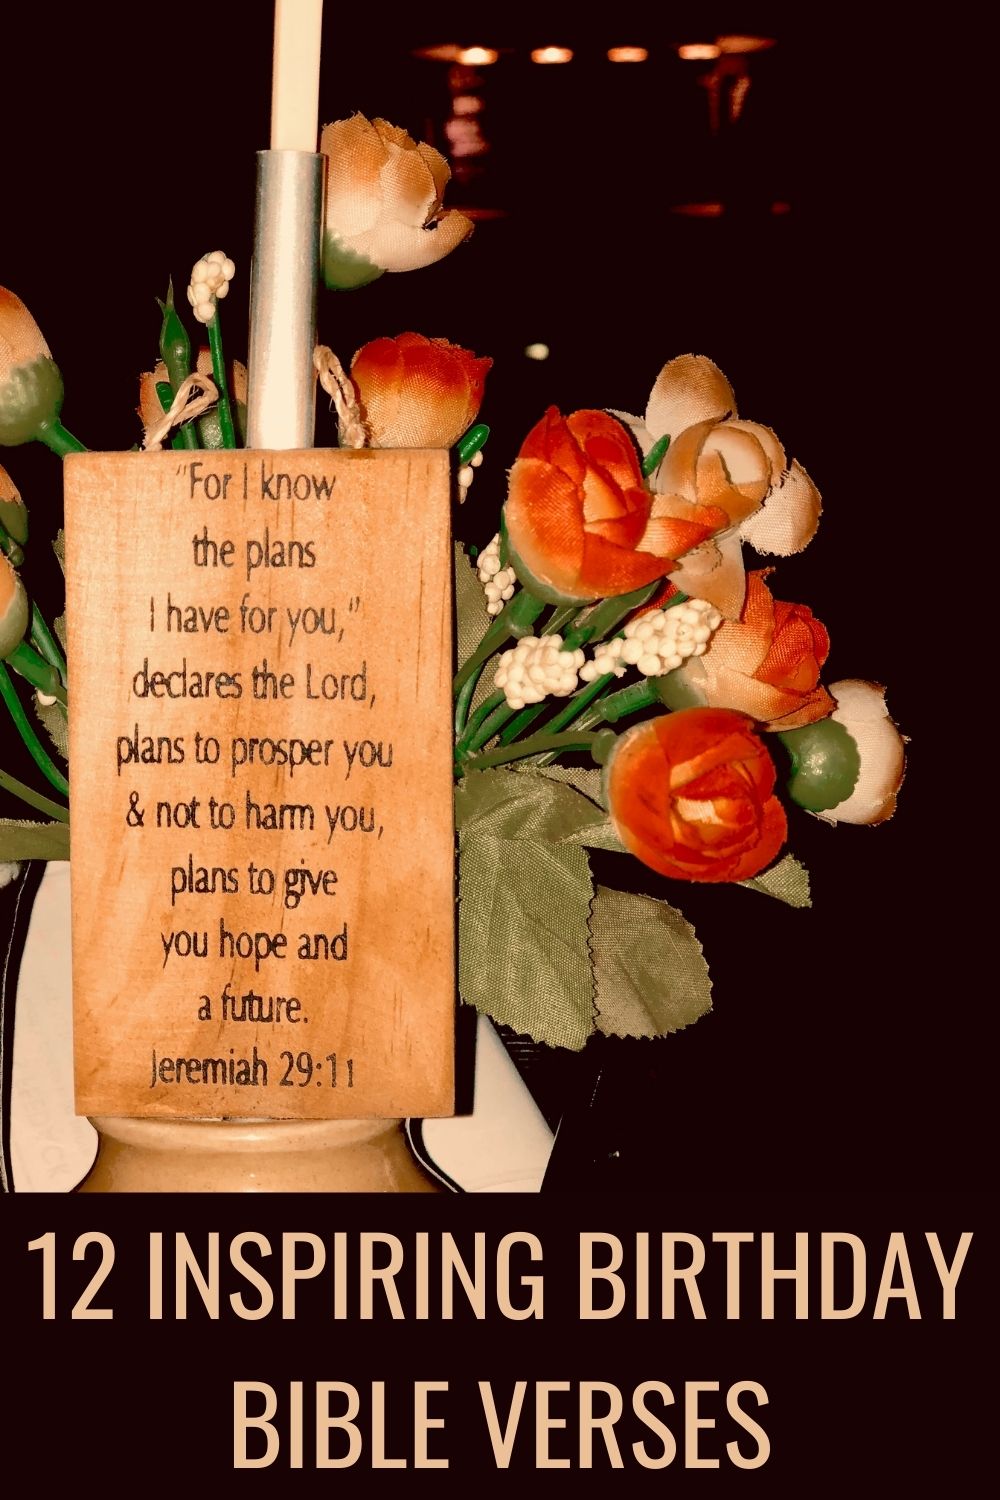 12 inspiring birthday Bible verses